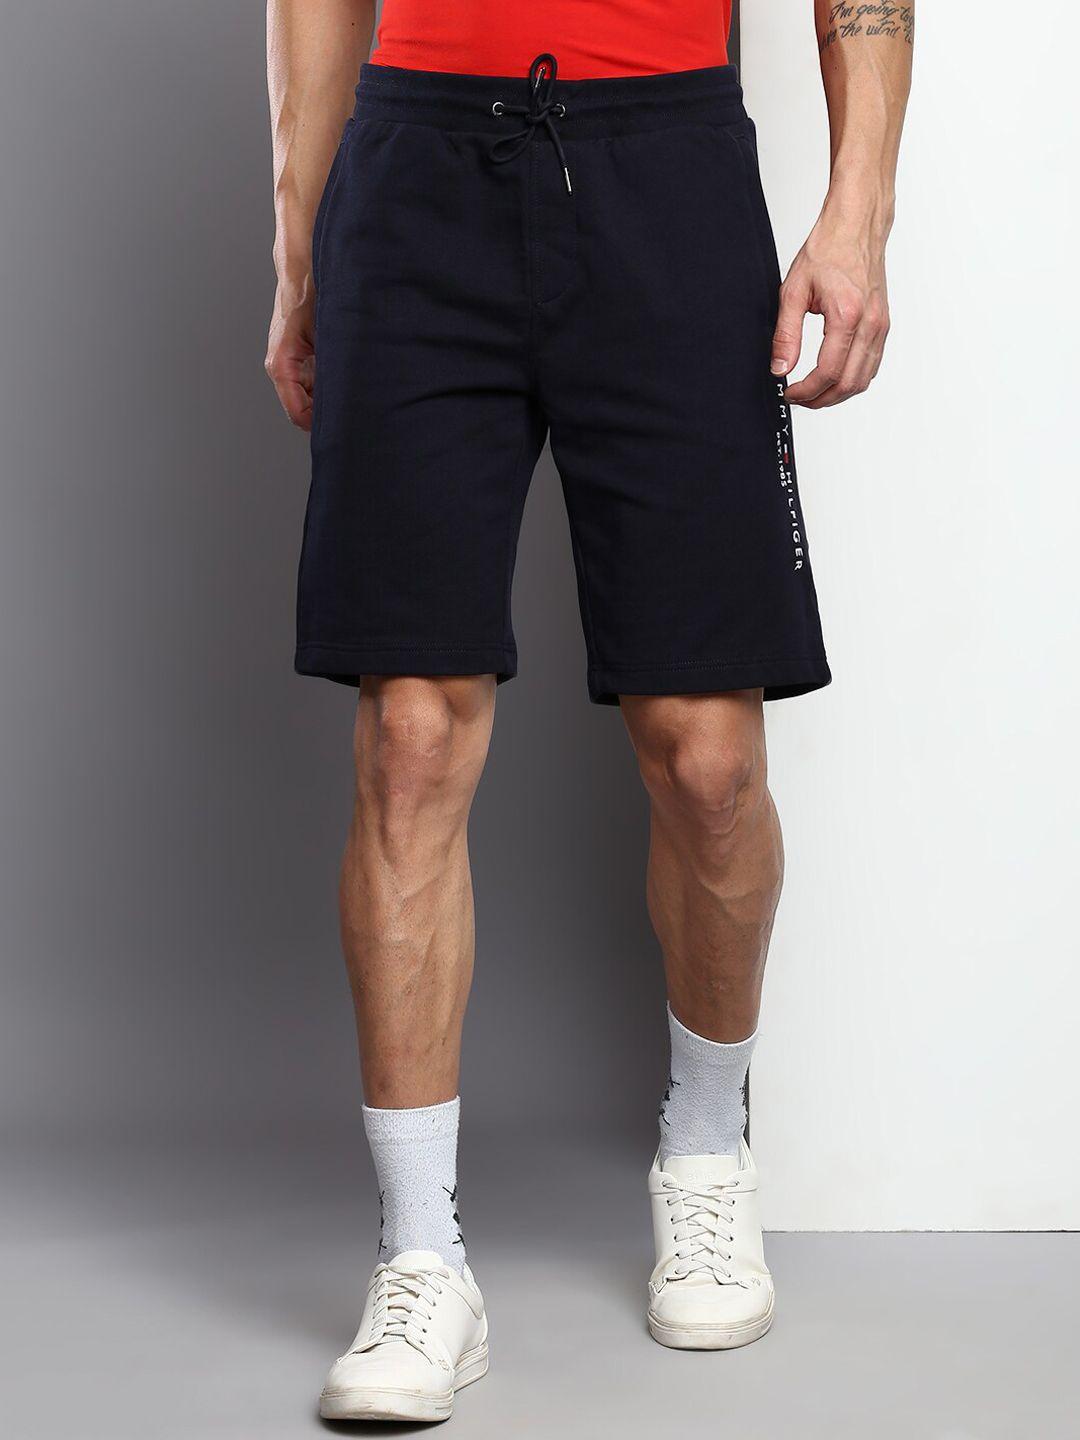 tommy hilfiger men outdoor sports cotton shorts